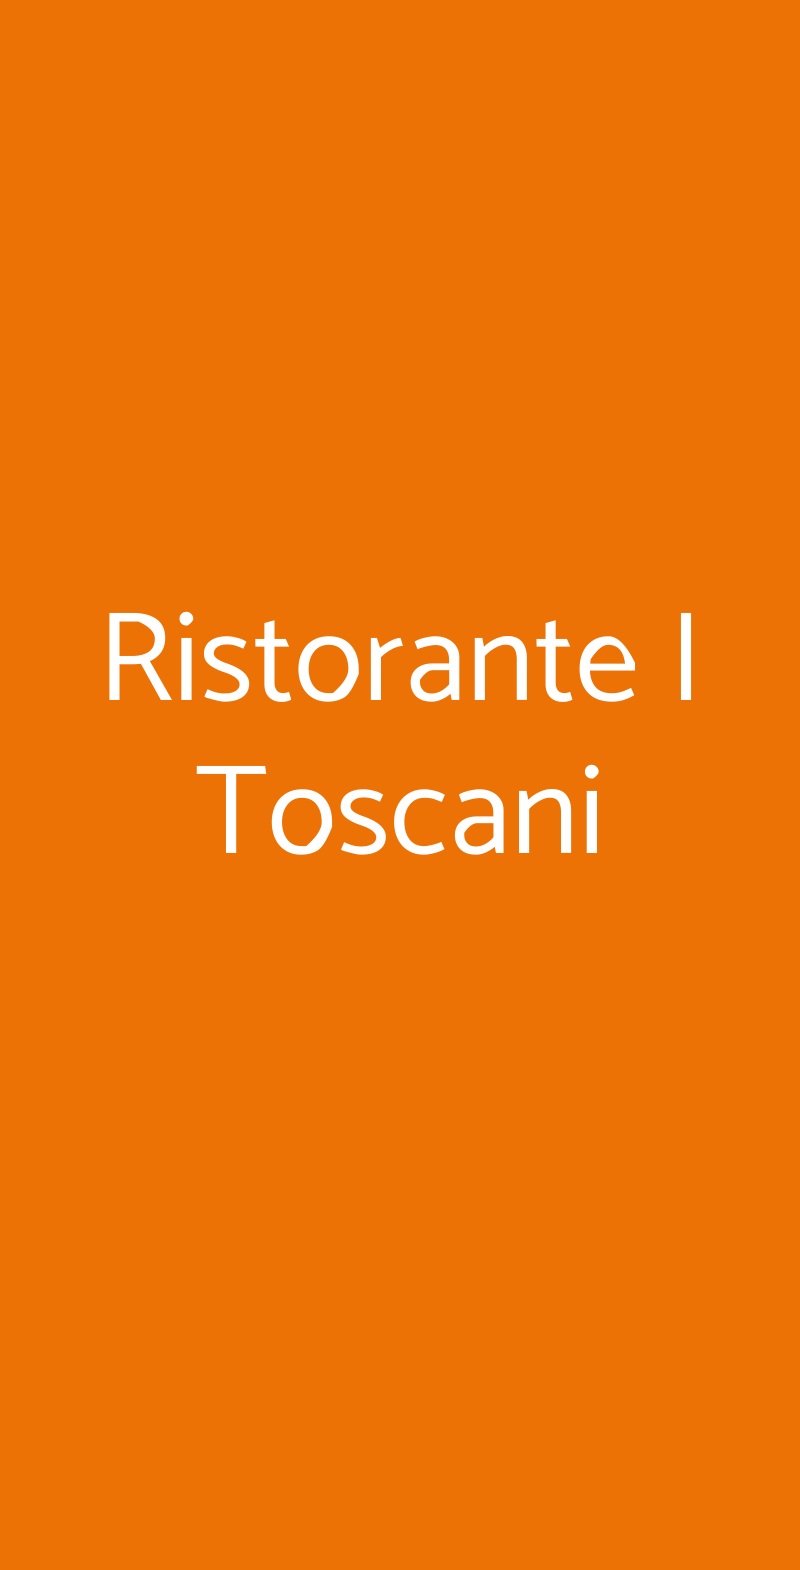 Ristorante I Toscani Campi Bisenzio menù 1 pagina